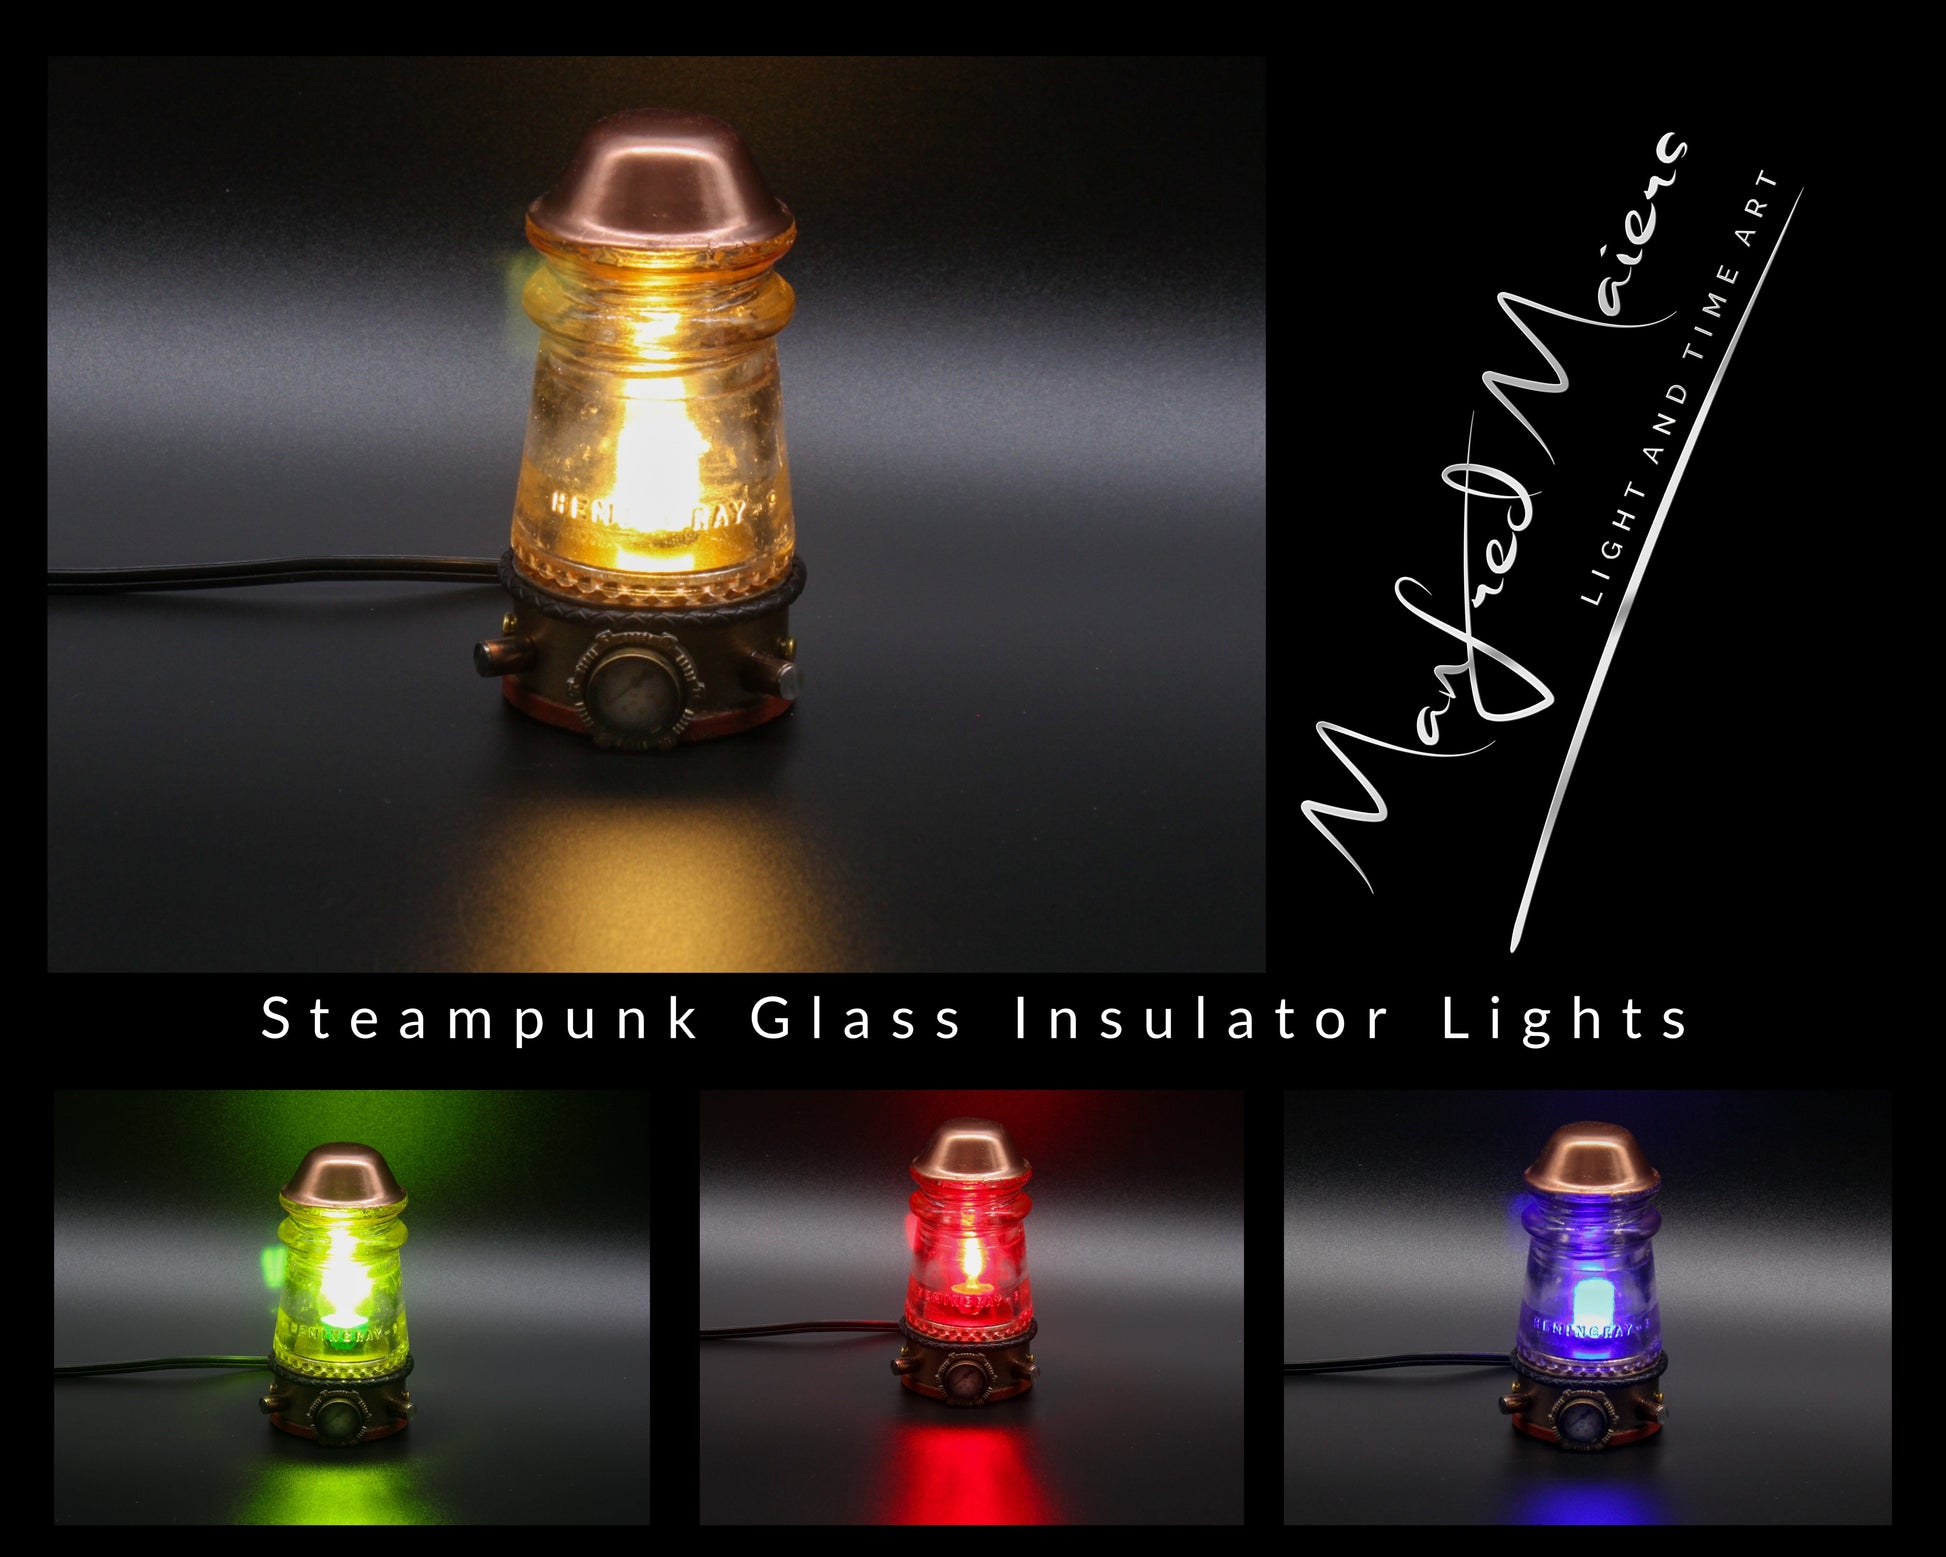 LightAndTimeArt Steampunk Lamp Steampunk Glass Insulator Lamp, Aluminum Base, Hemingray-9, Industrial Lighting, Man Cave Deco, Neo Victorian Lamp design, Cyberpunk Lamp